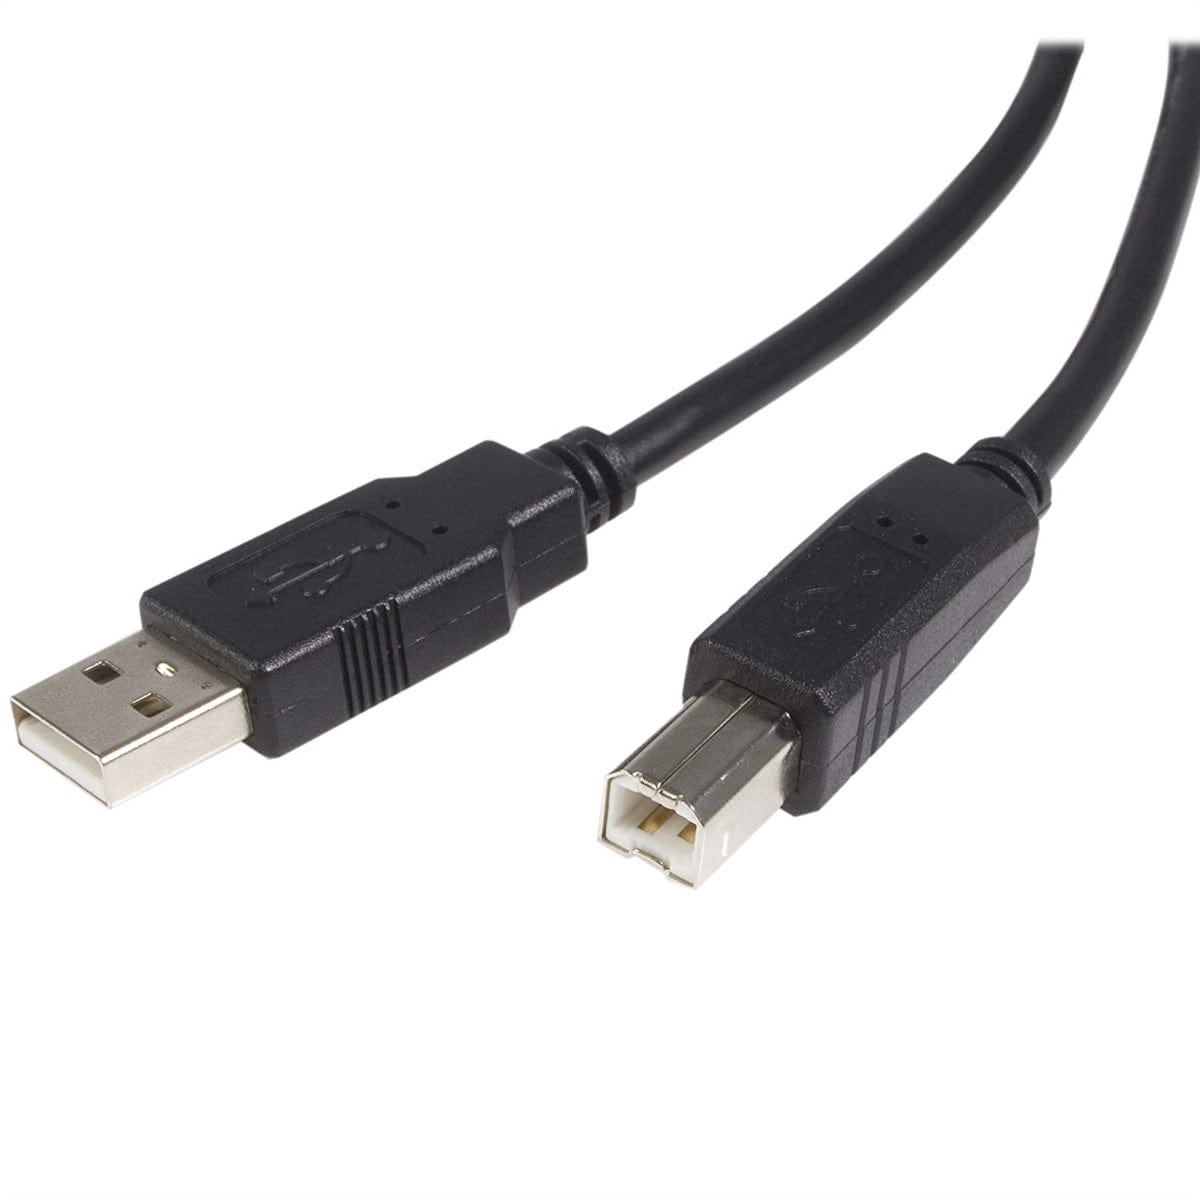 iOptron Accessory iOptron USB Cable - 8416